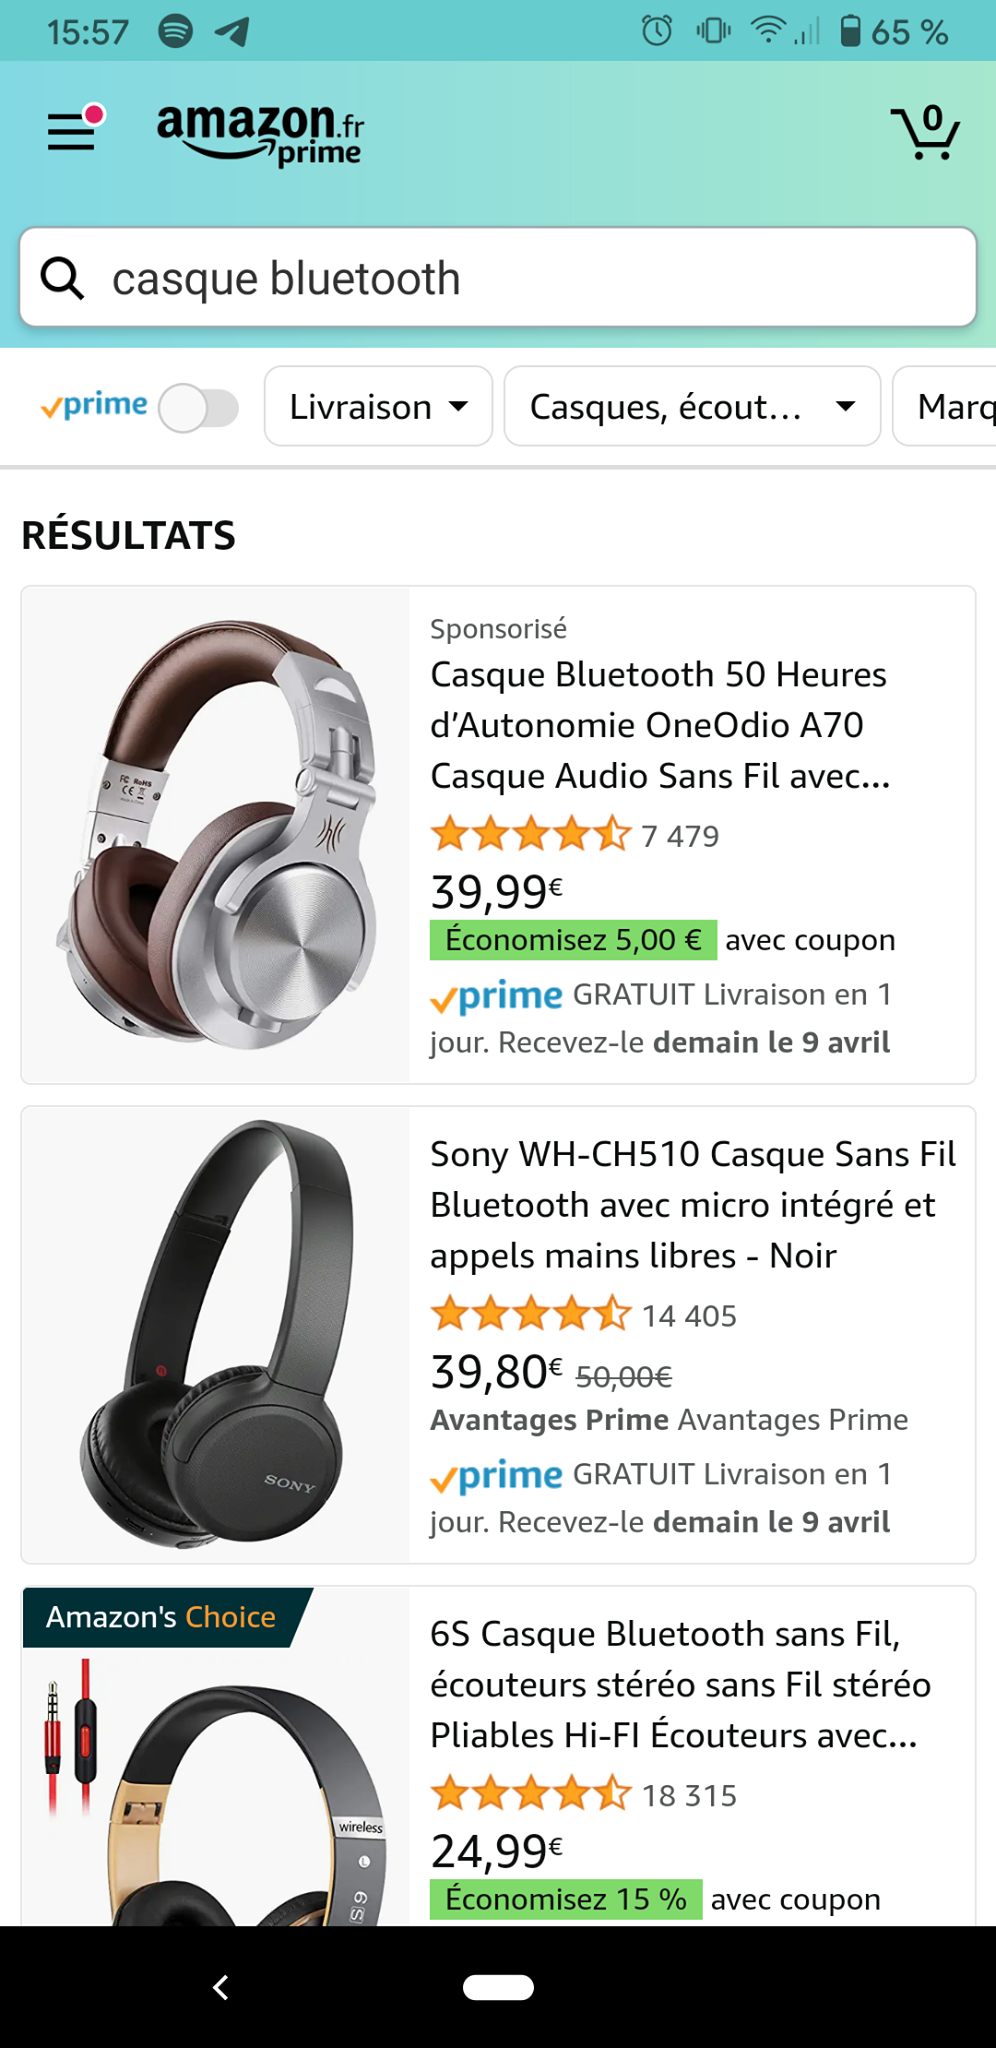  Amazon Sponsored Products